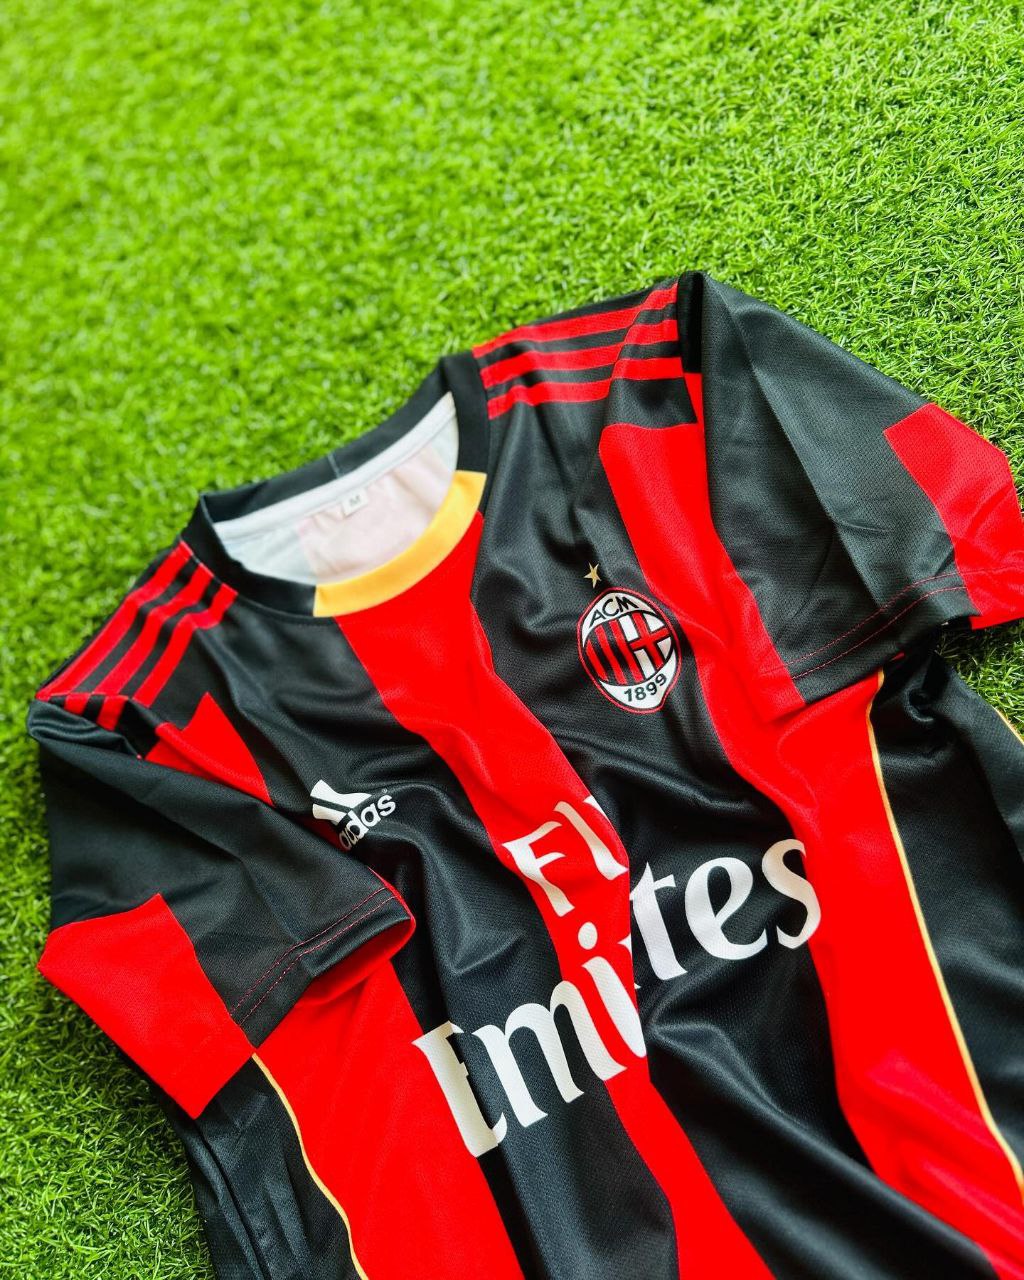 Nesta 2010-11 AC Milan Retro Jersey